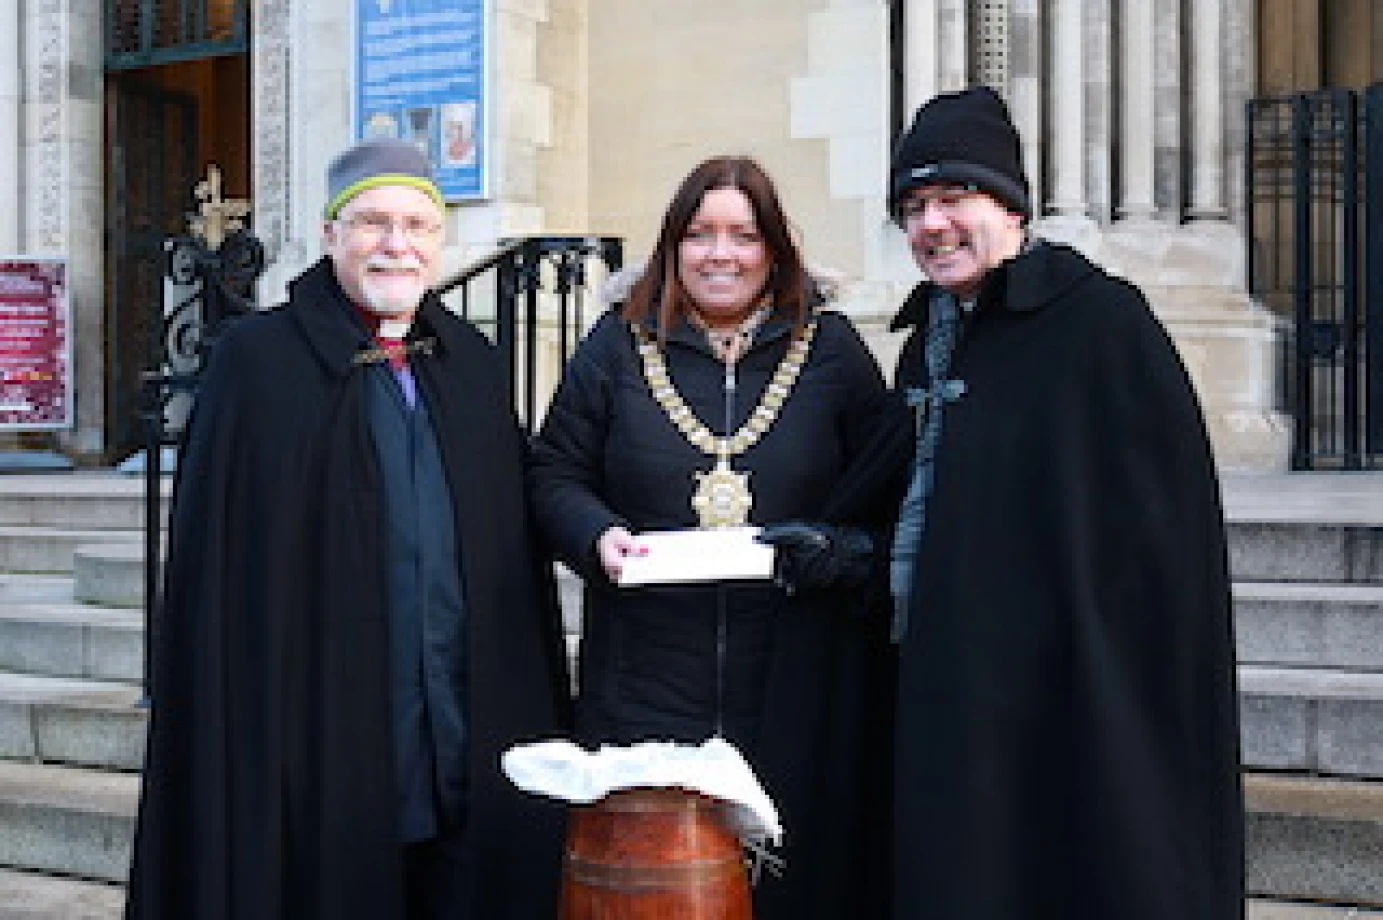 Belfast Cathedral Black Santa raises £160,000 for charities